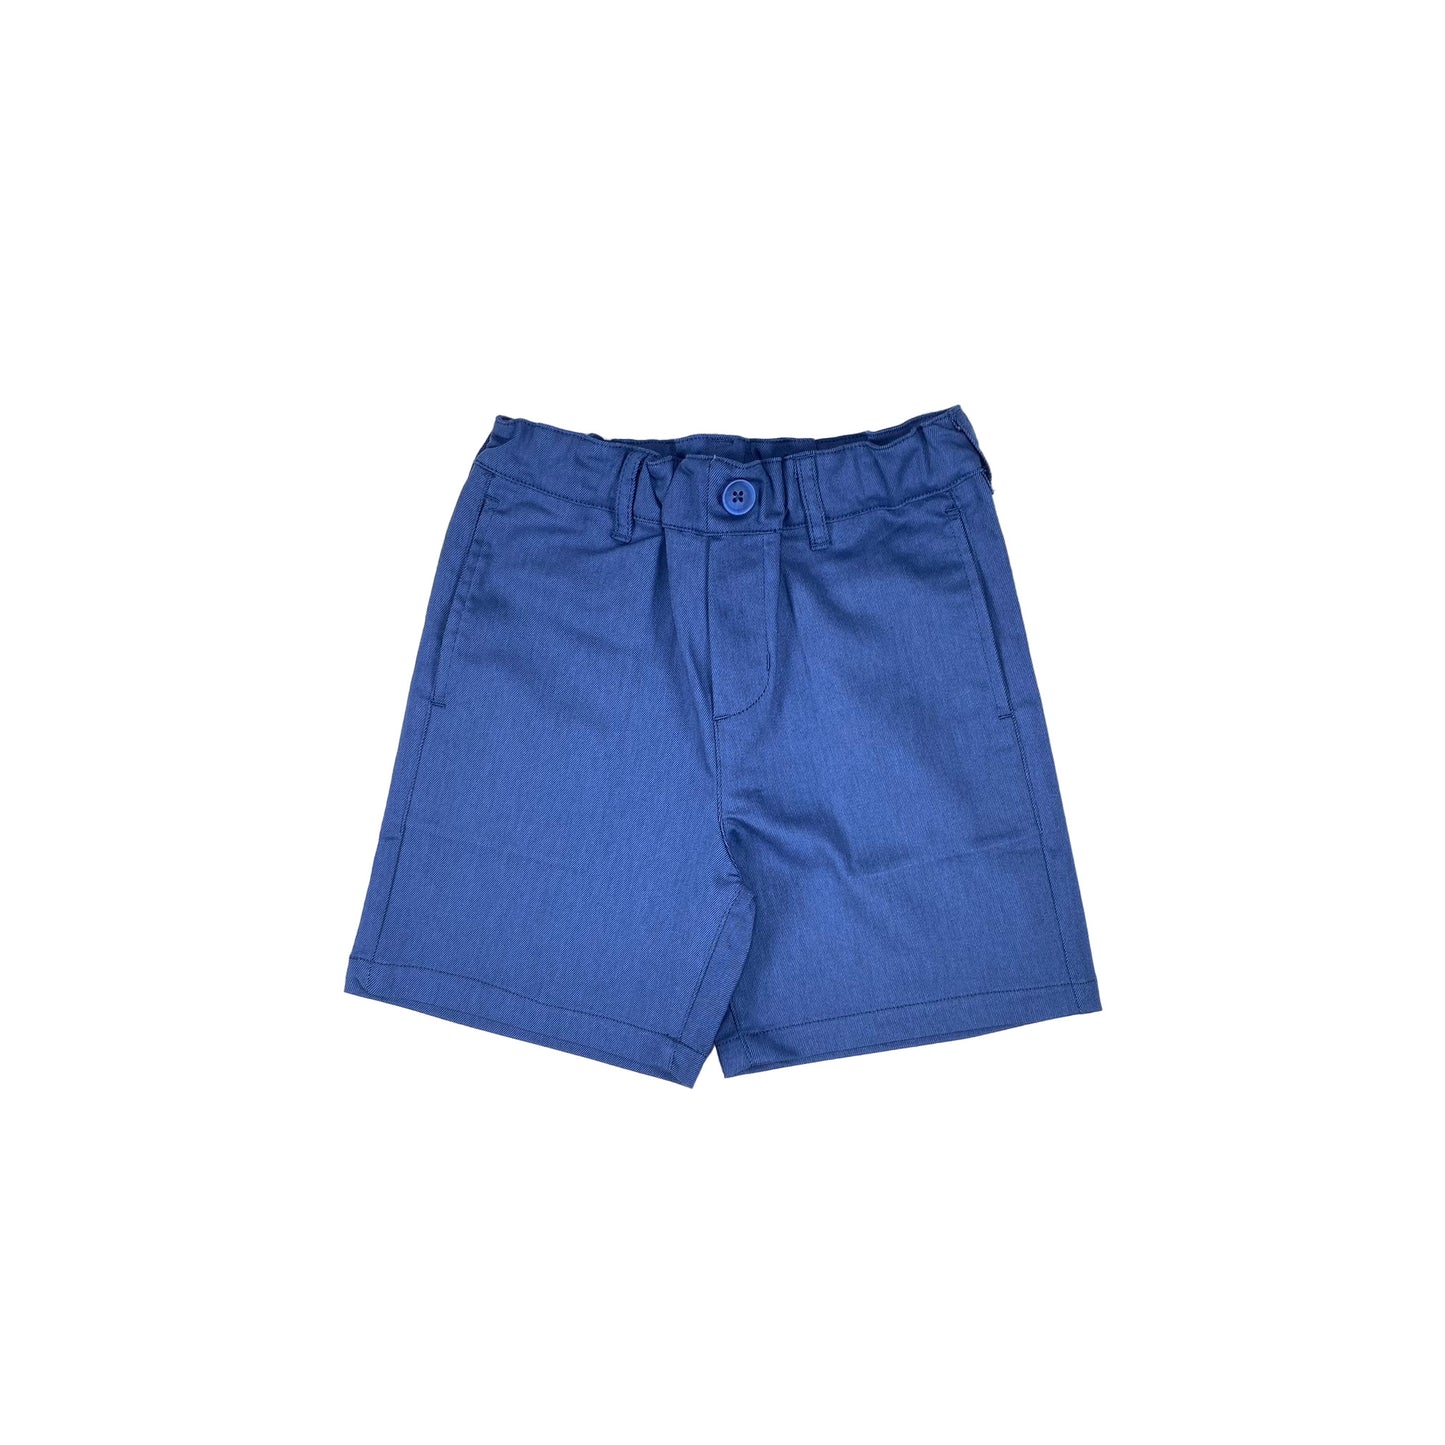 Ishtex ® Navy Twill Boy's Shorts